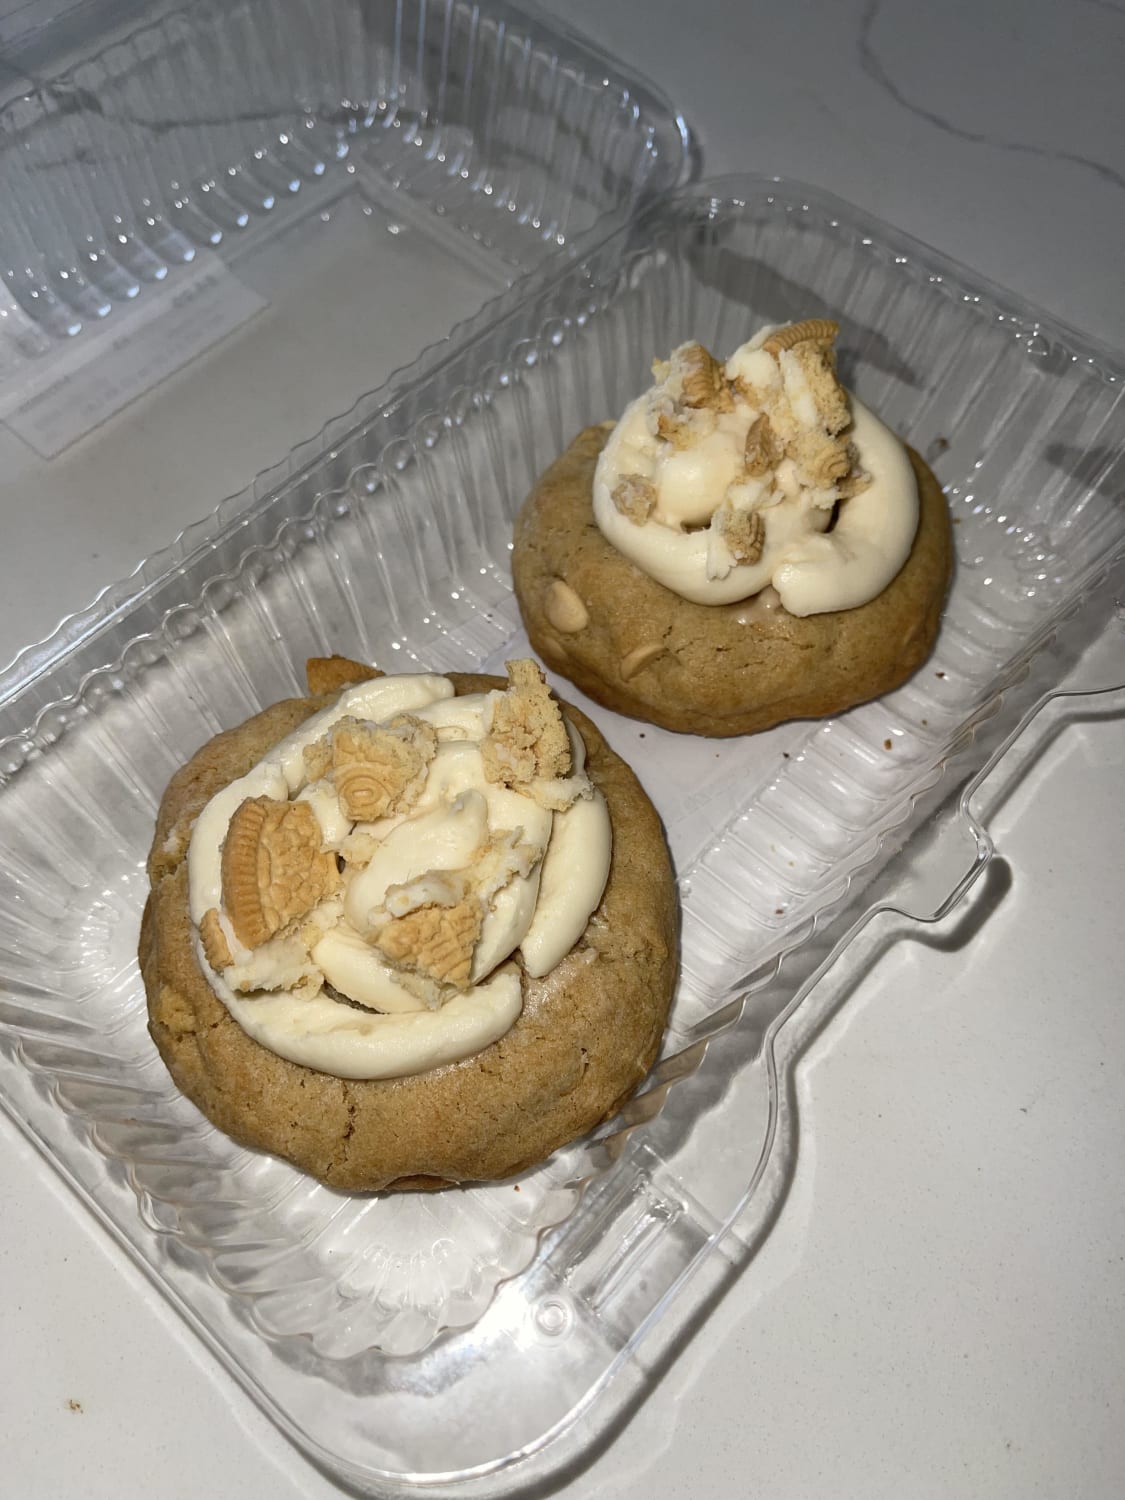 Homemade Golden Oreo cookies!